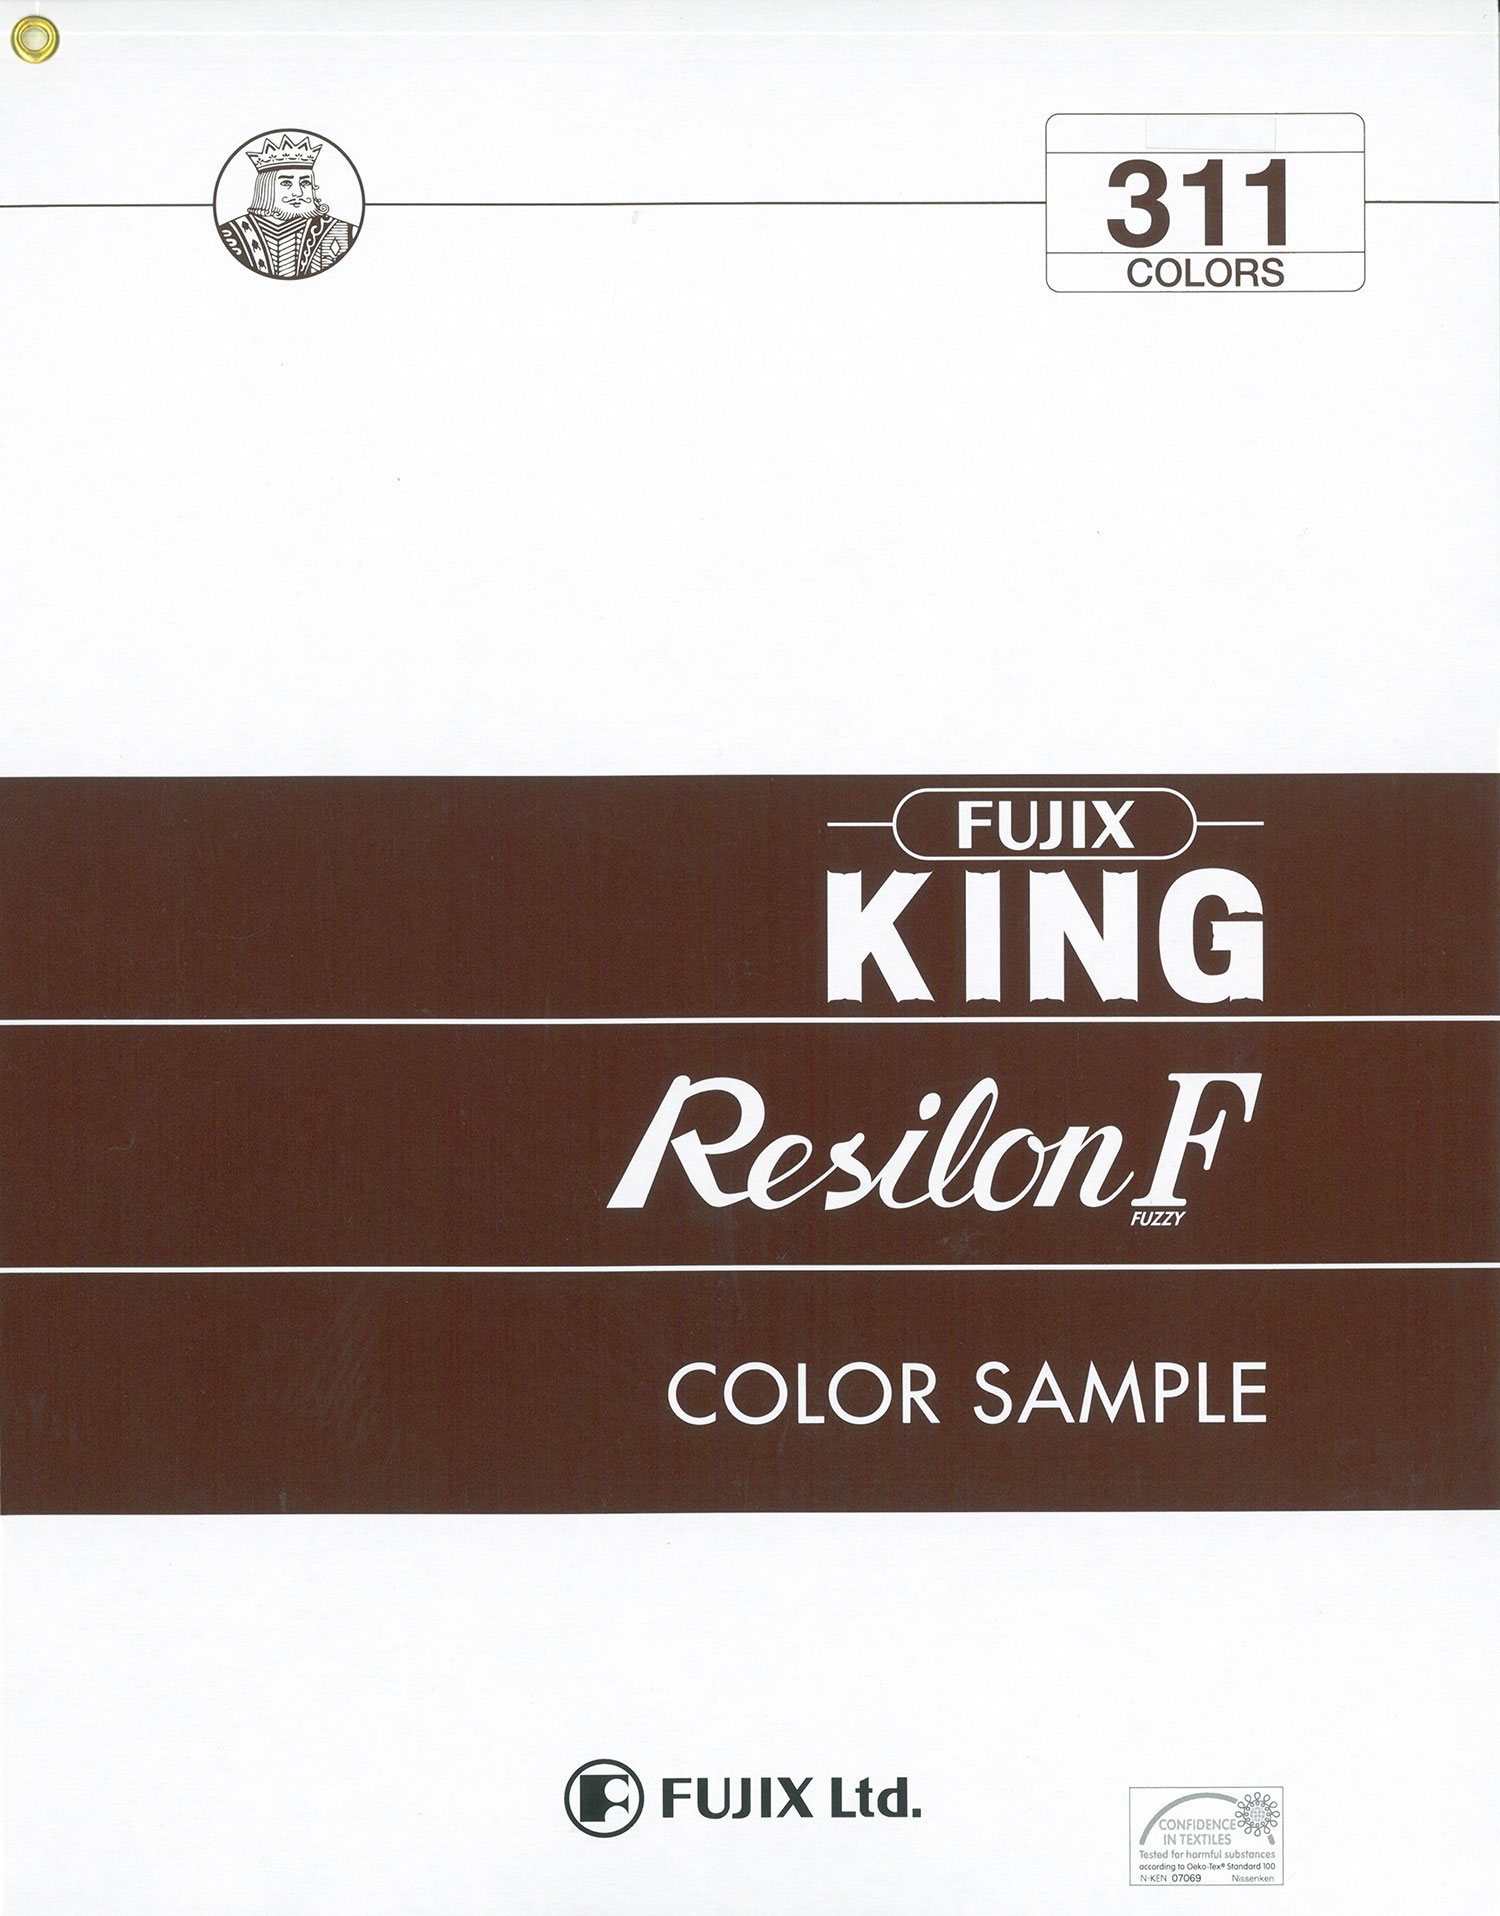 FUJIX-SAMPLE-7 KING Resilon FUZZY[Musterkarte] FUJIX